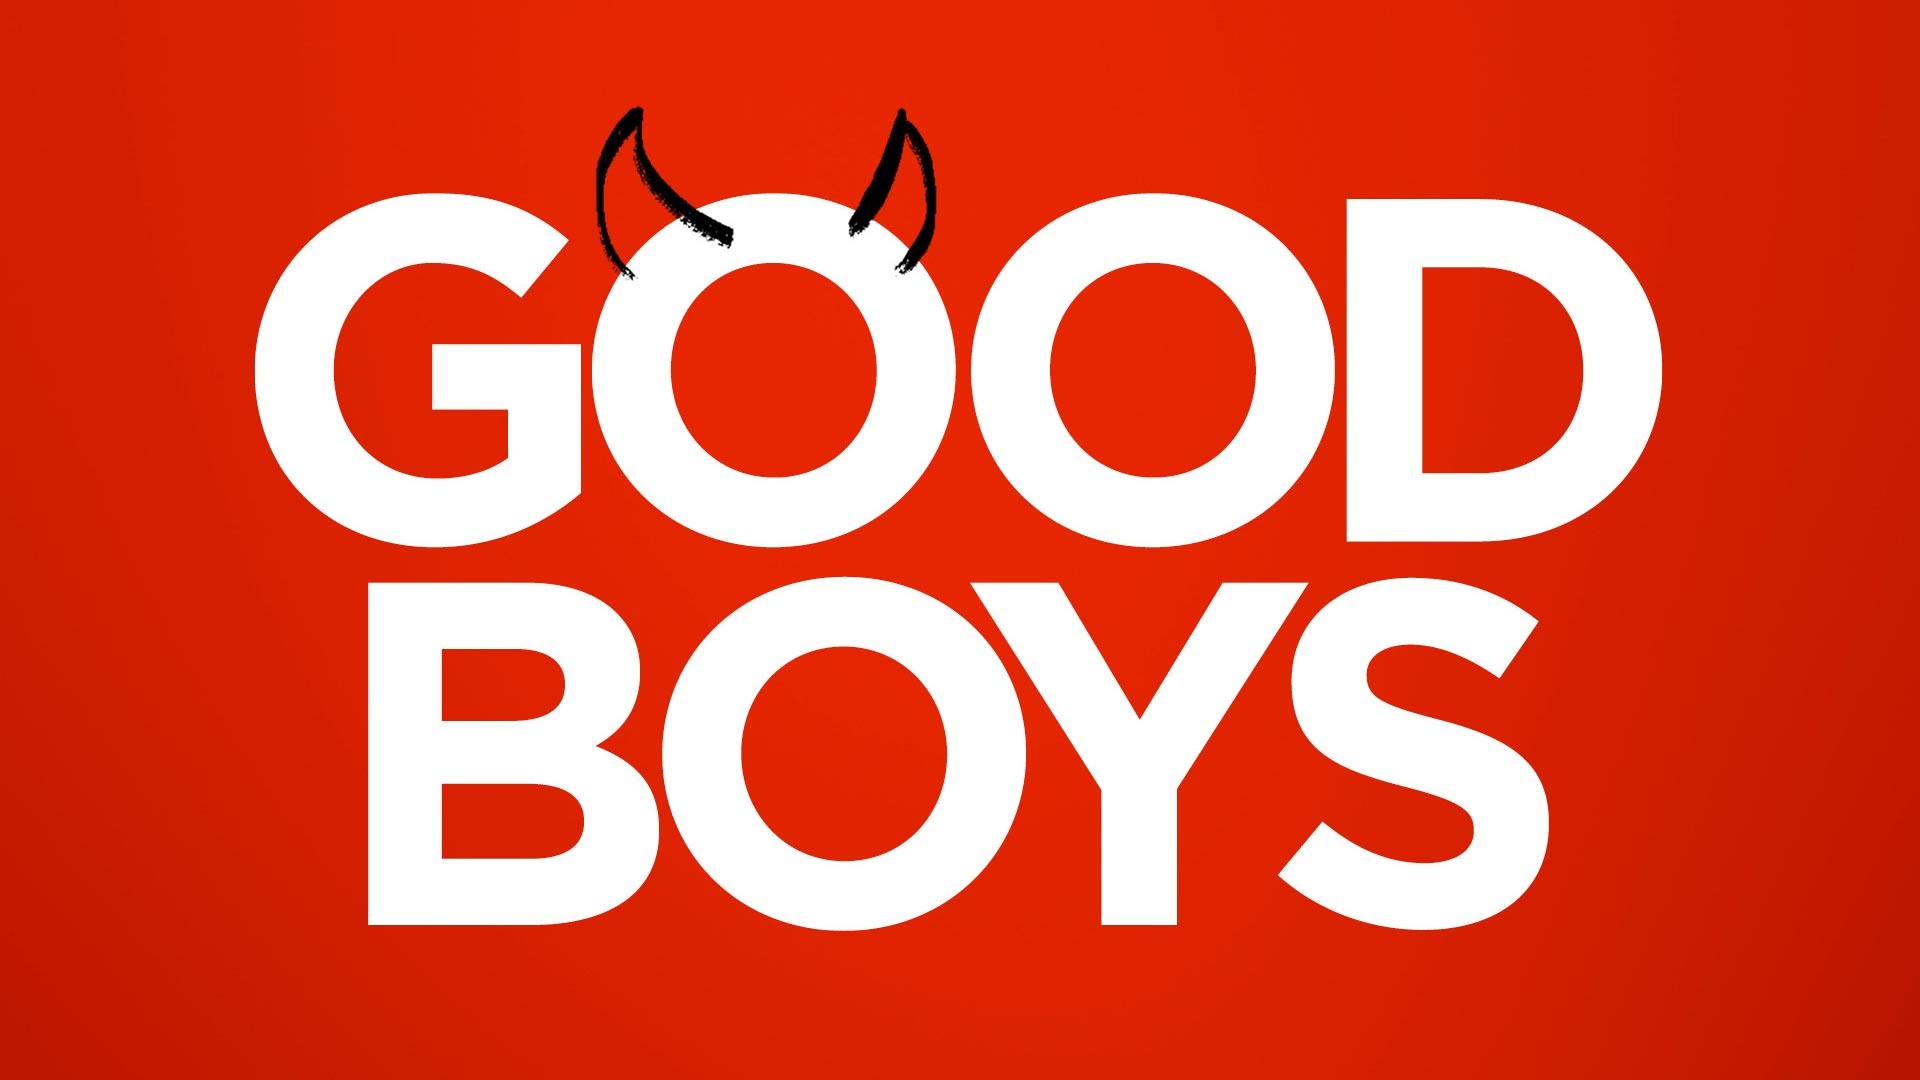 We were good boys. Good boy лого. Good boy название. Good boy 4 game. Good boy надпись.